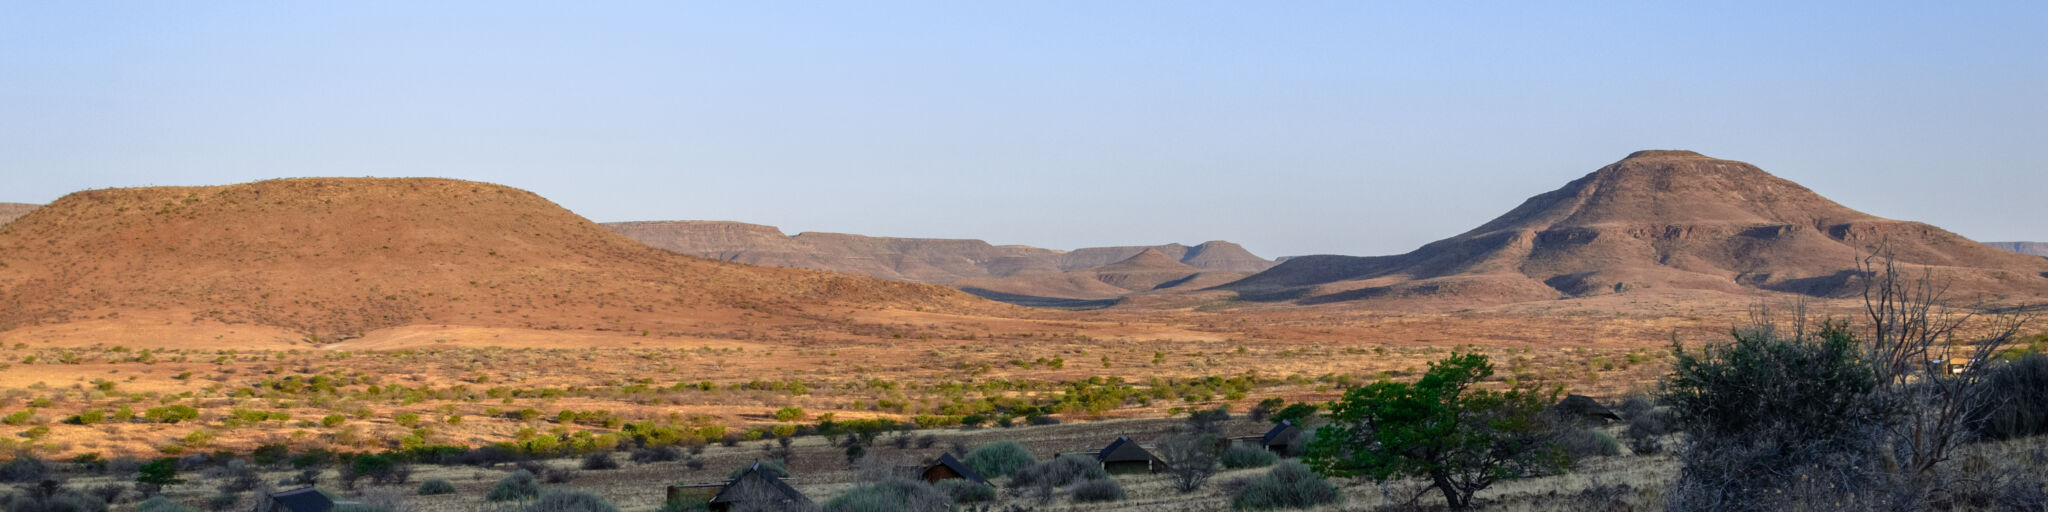 Doro Nawas Camp, Damaraland, Namibia